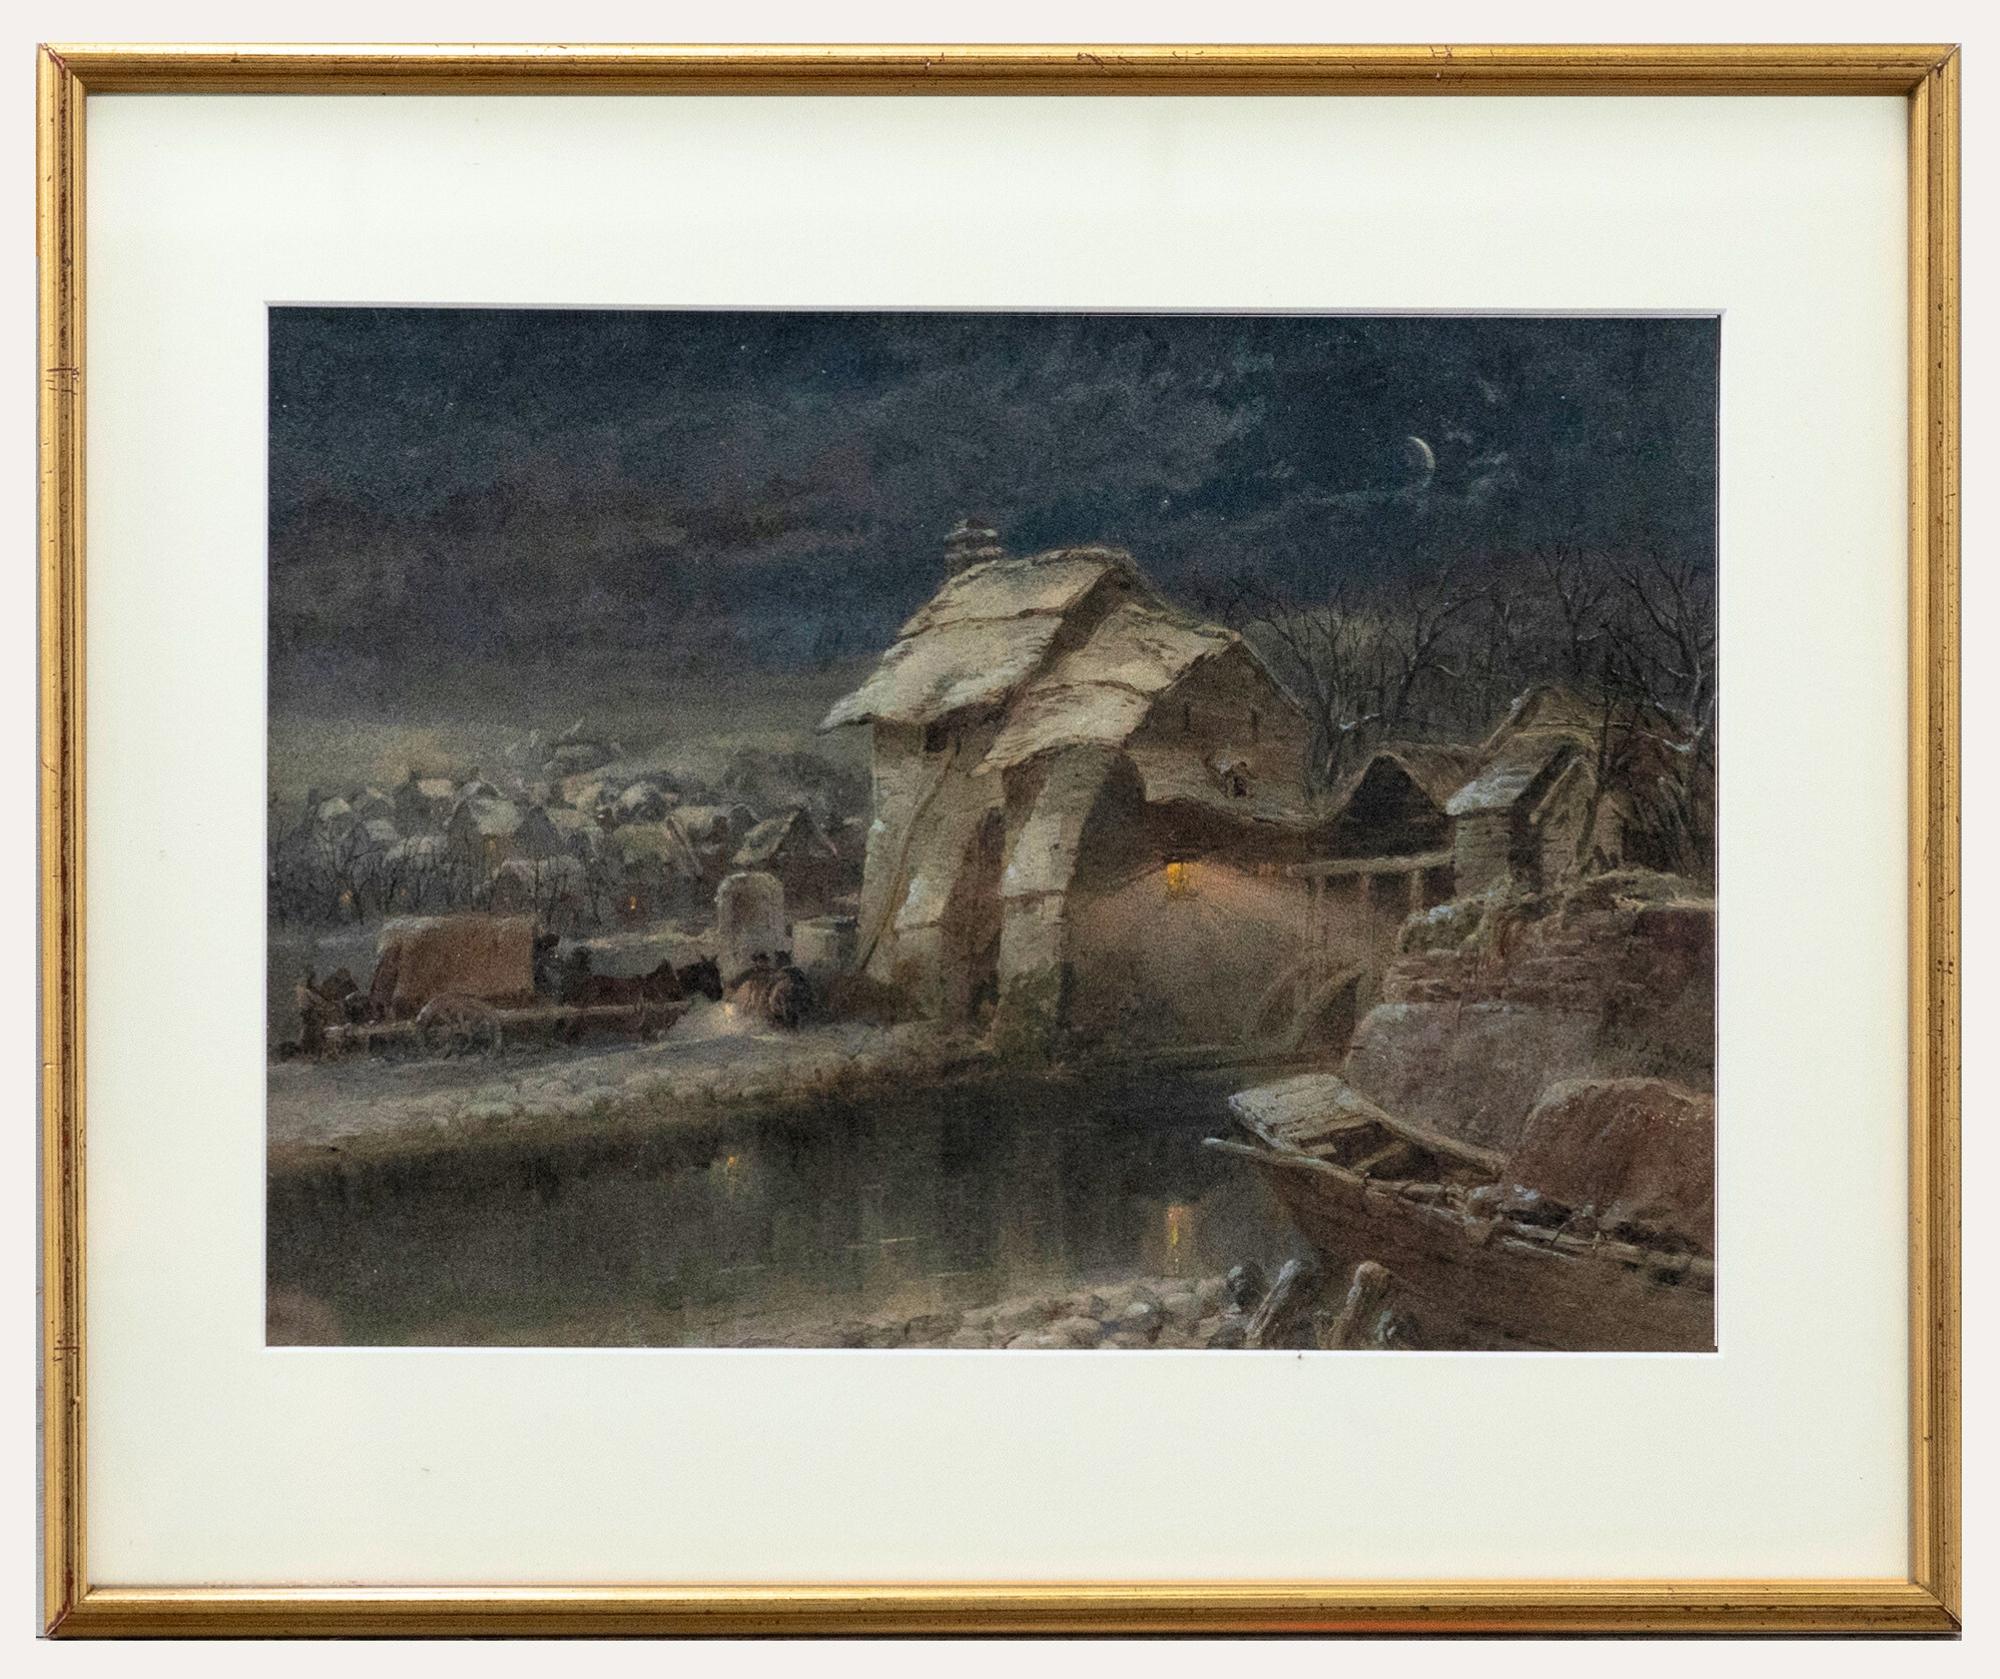 Unknown Landscape Art - Joseph John Jenkins (1811-1885) - 1881 Watercolour, A Winter's Eve